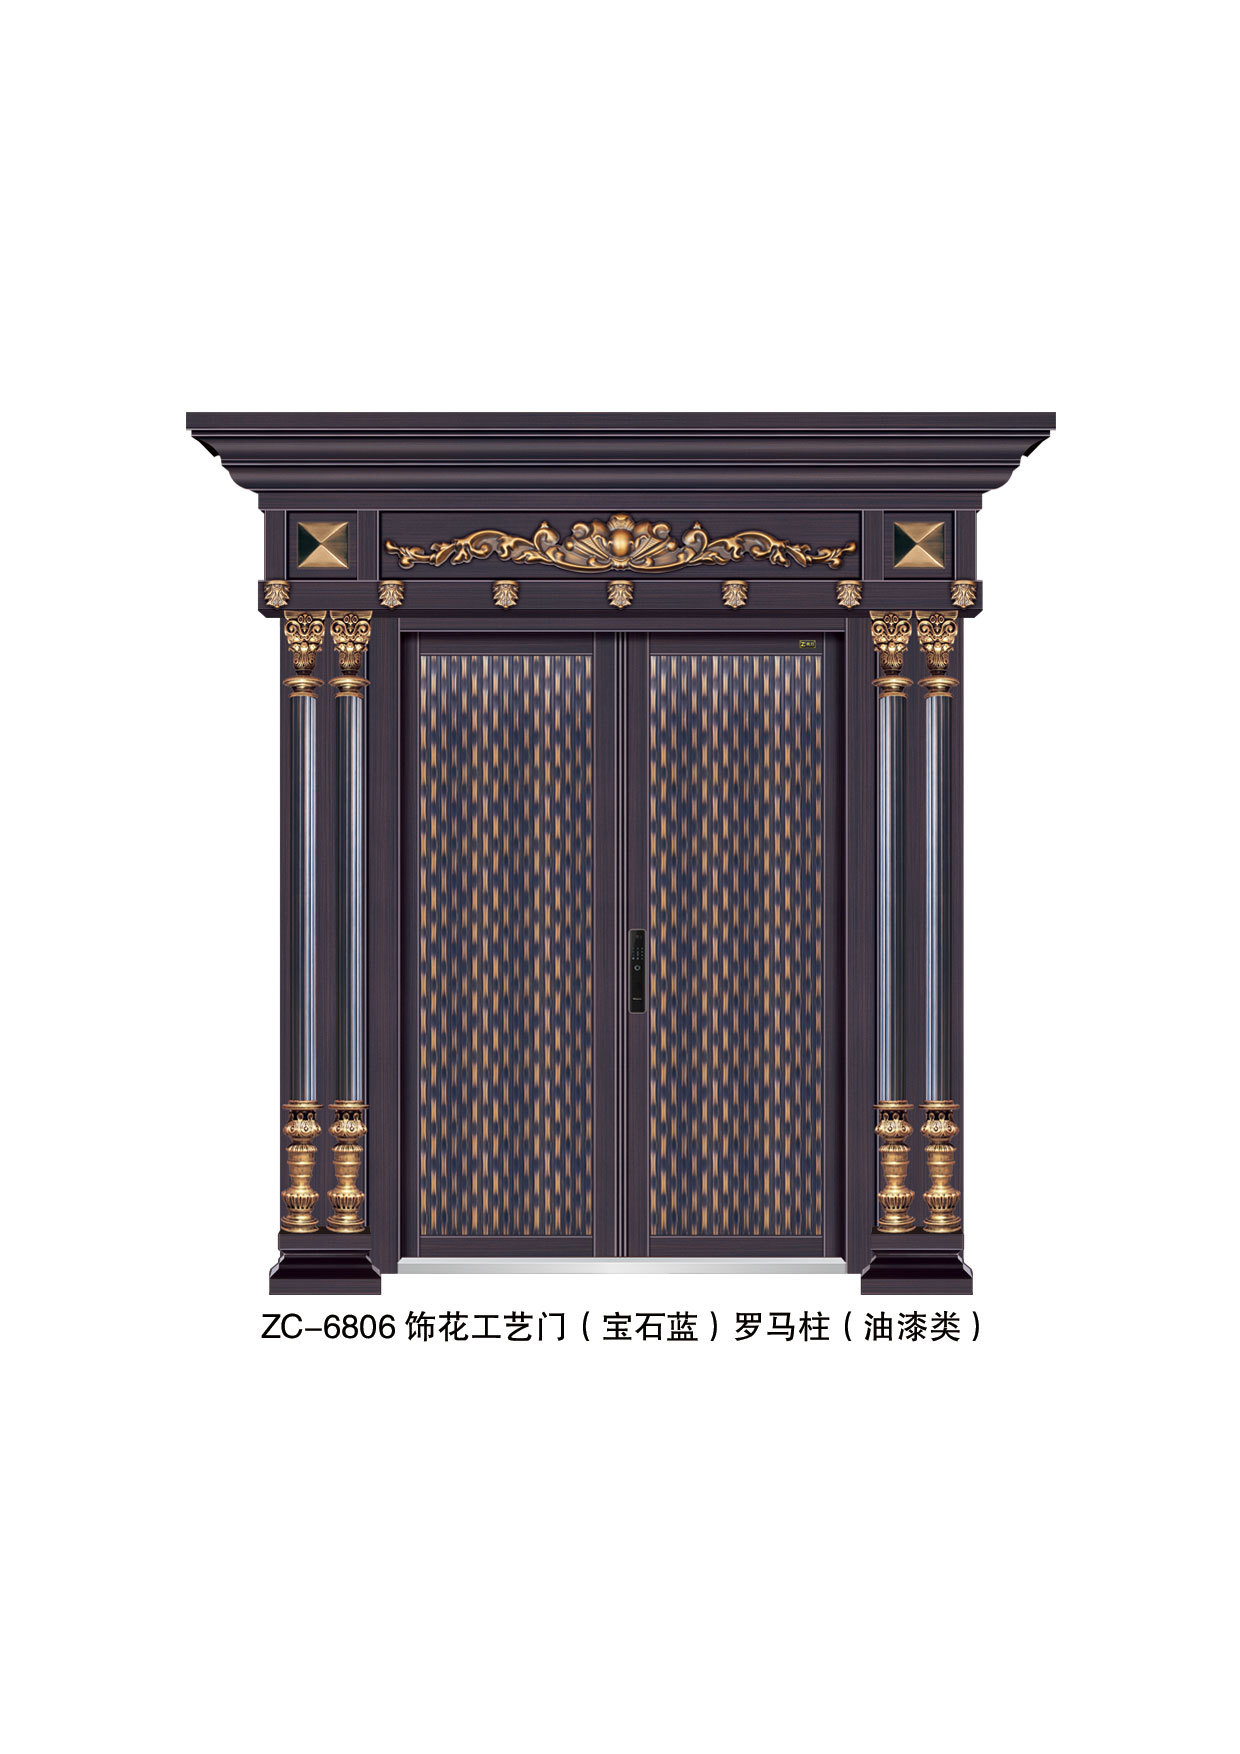 ZC-6808 饰花工艺门（宝石蓝）罗马柱